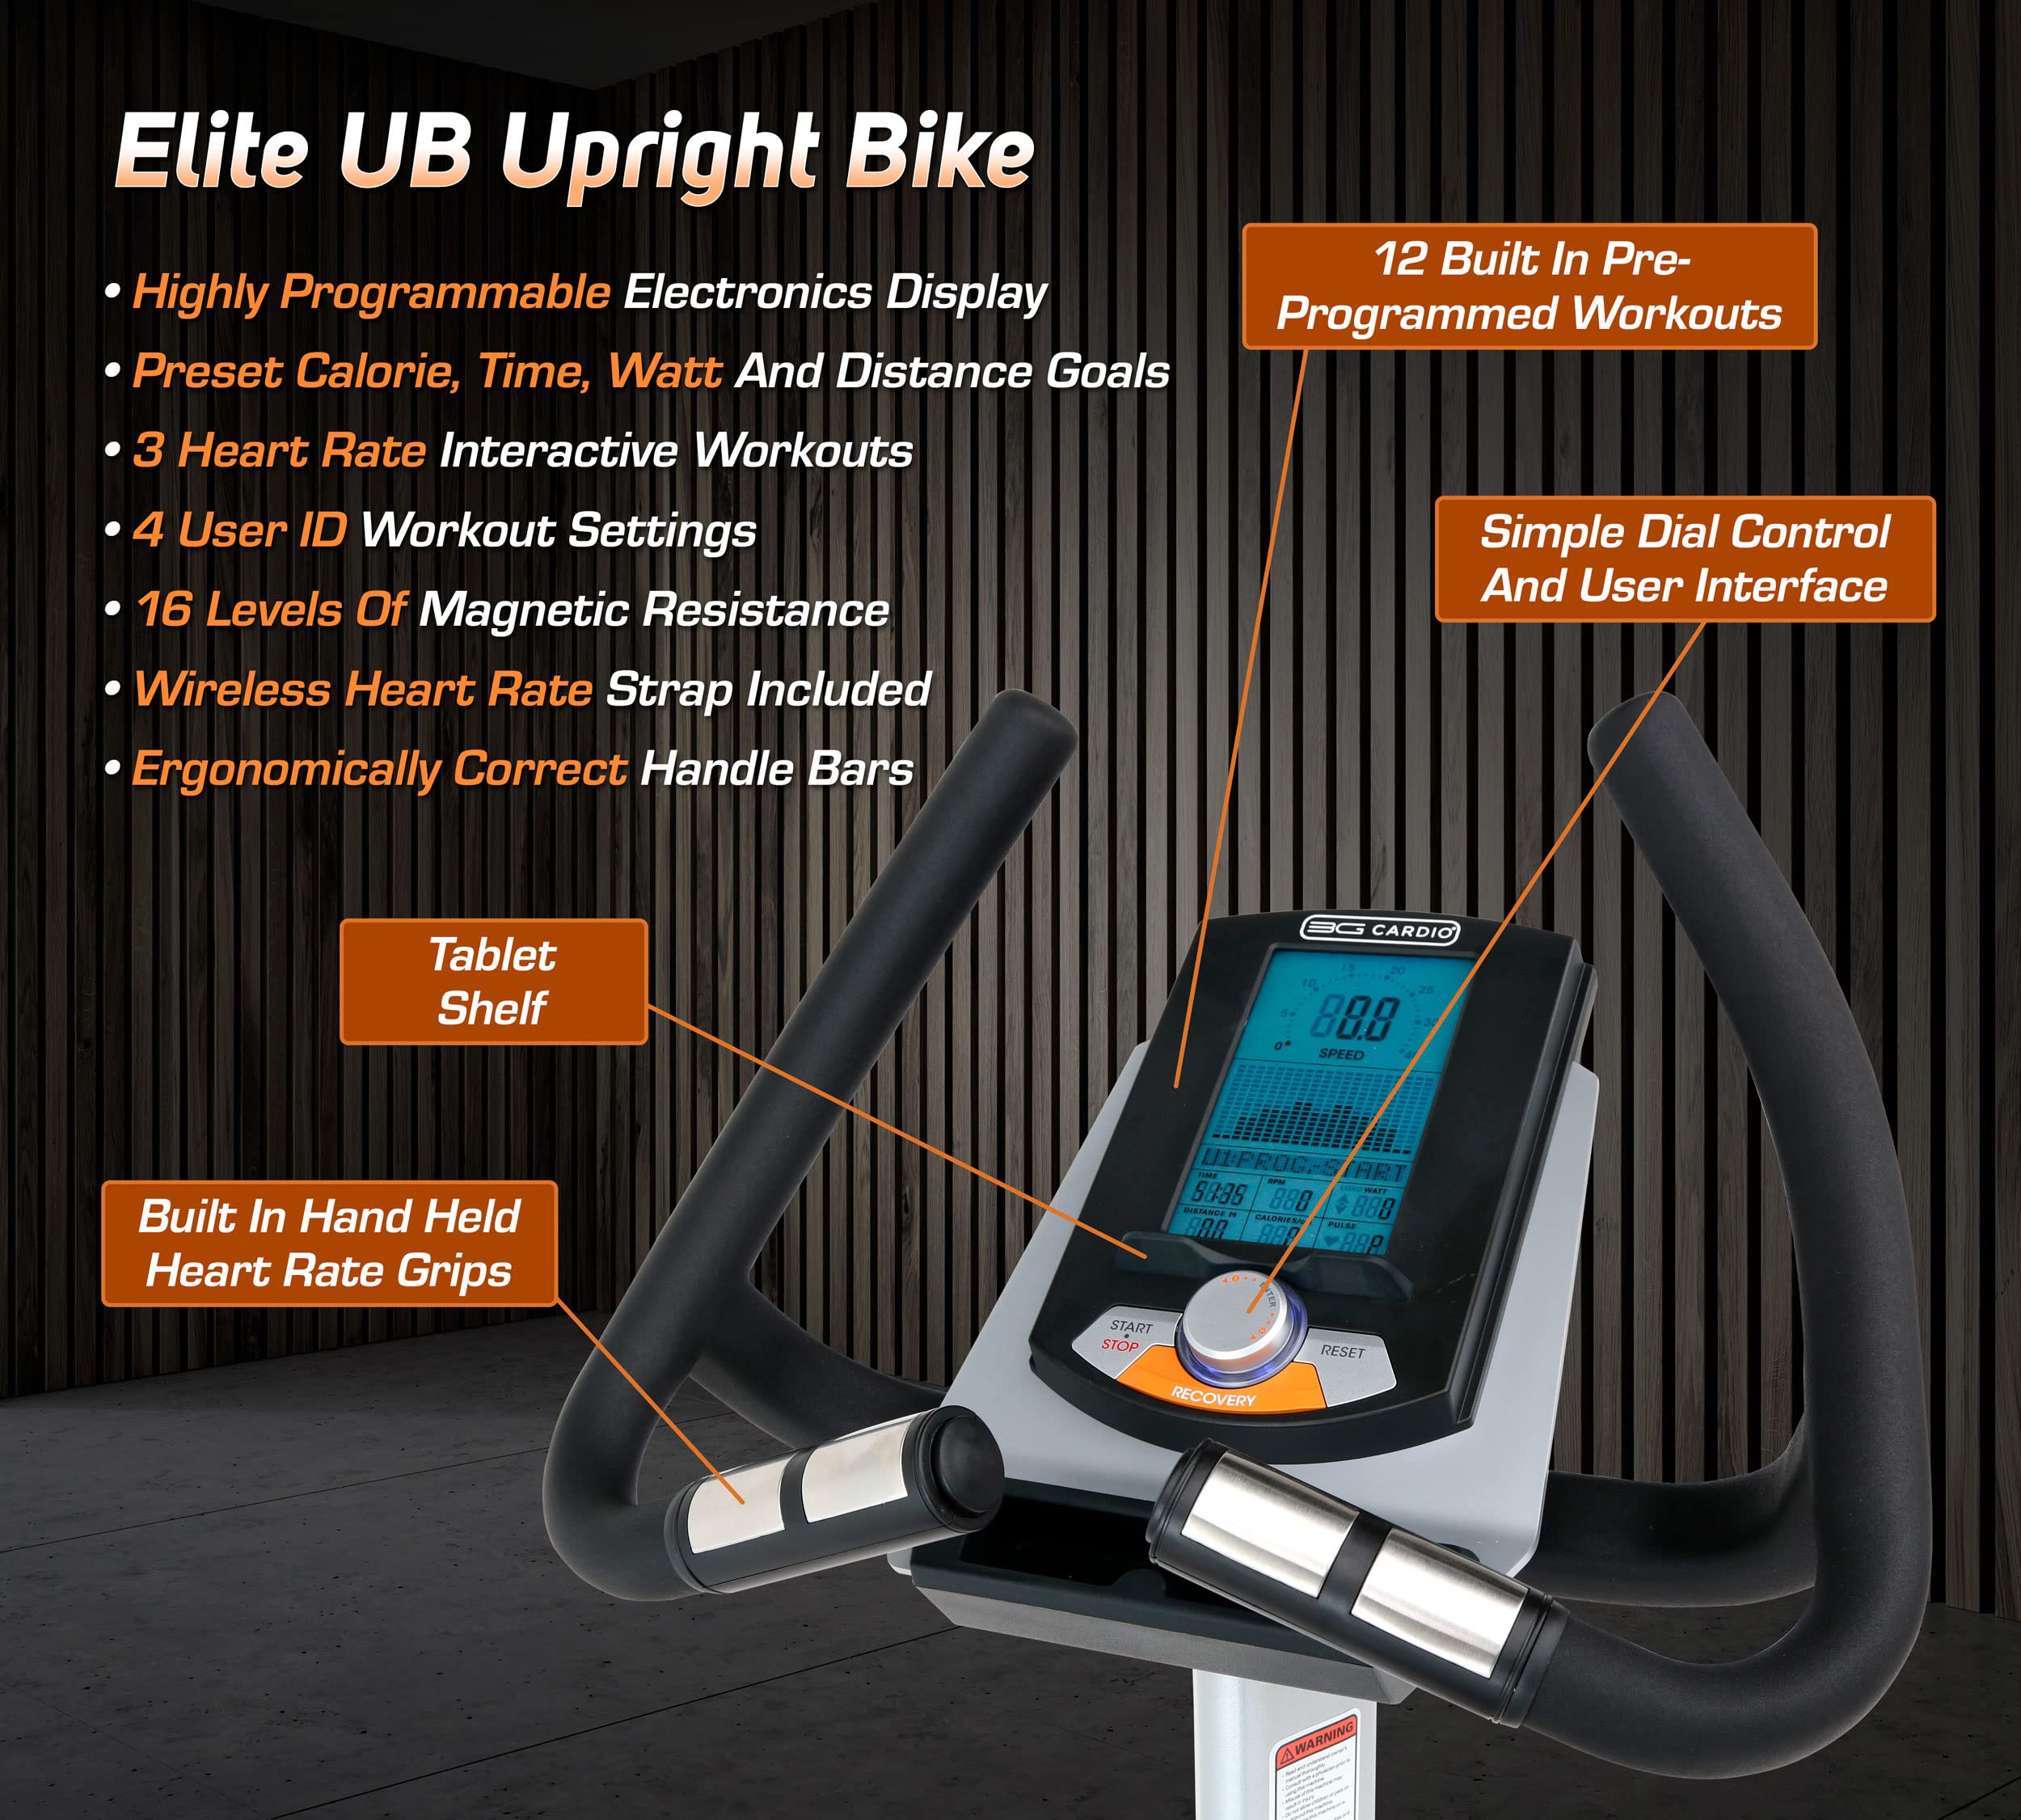 3G Cardio Elite UB Upright Bike - Commercial Grade